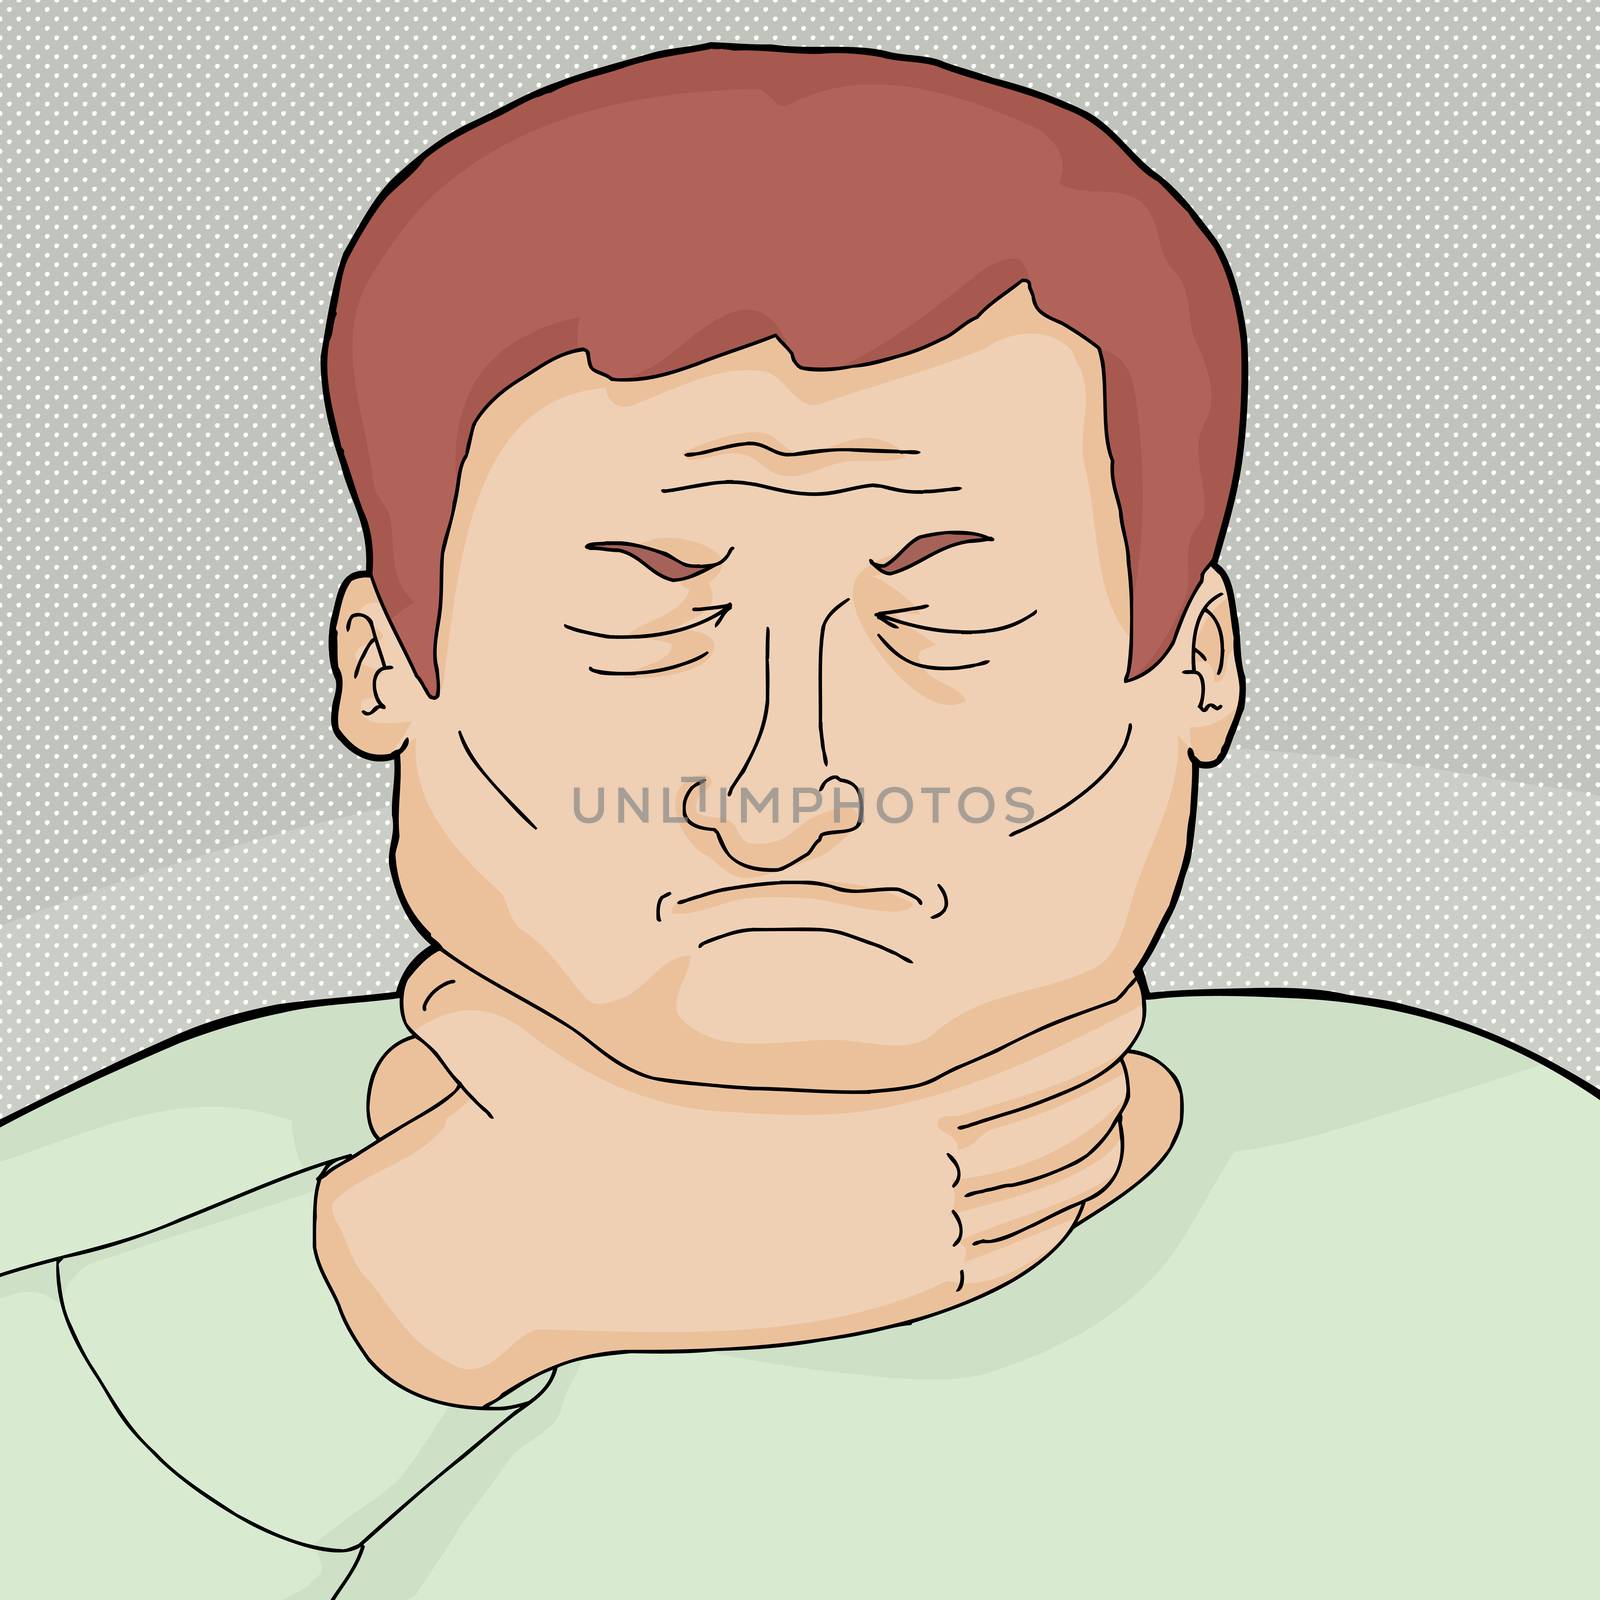 Red head European man with sore throat